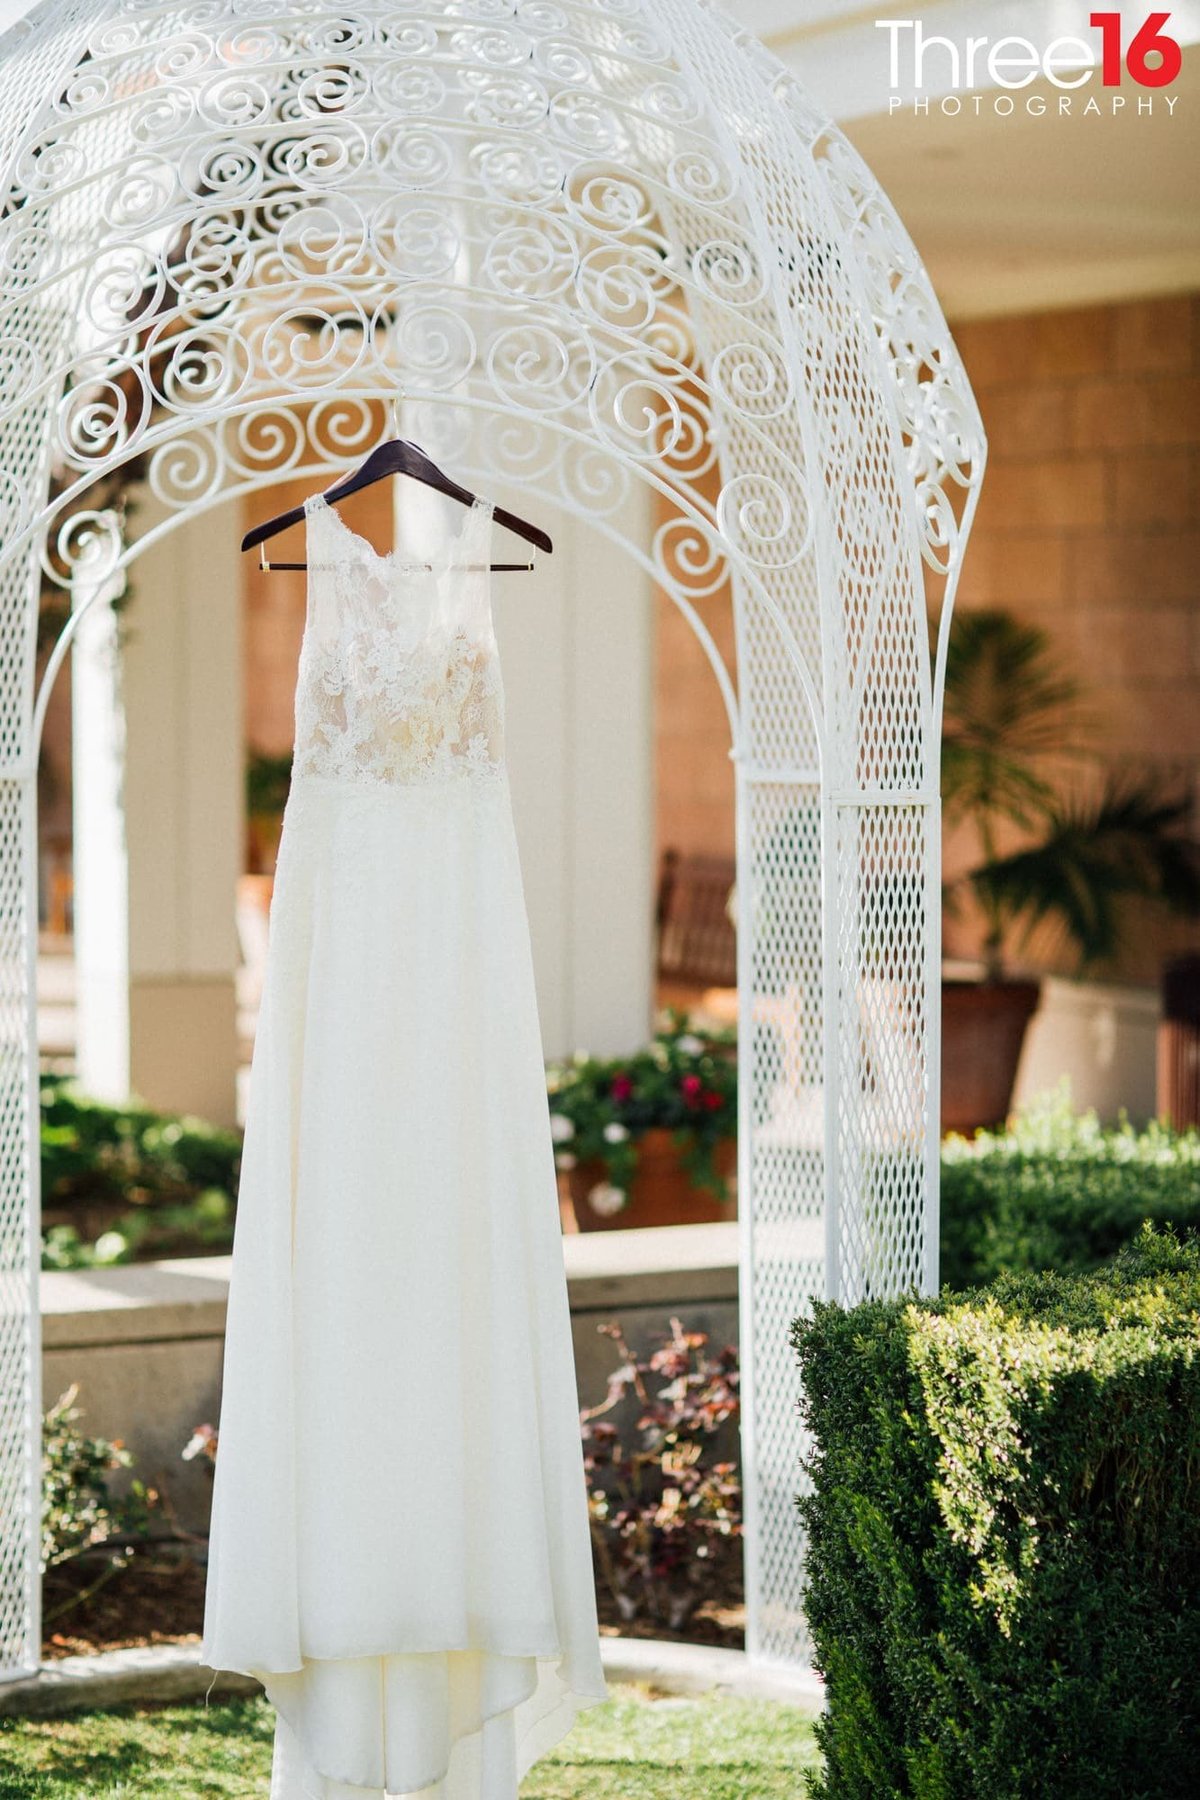 Bride's dress hangs from a small gazebo